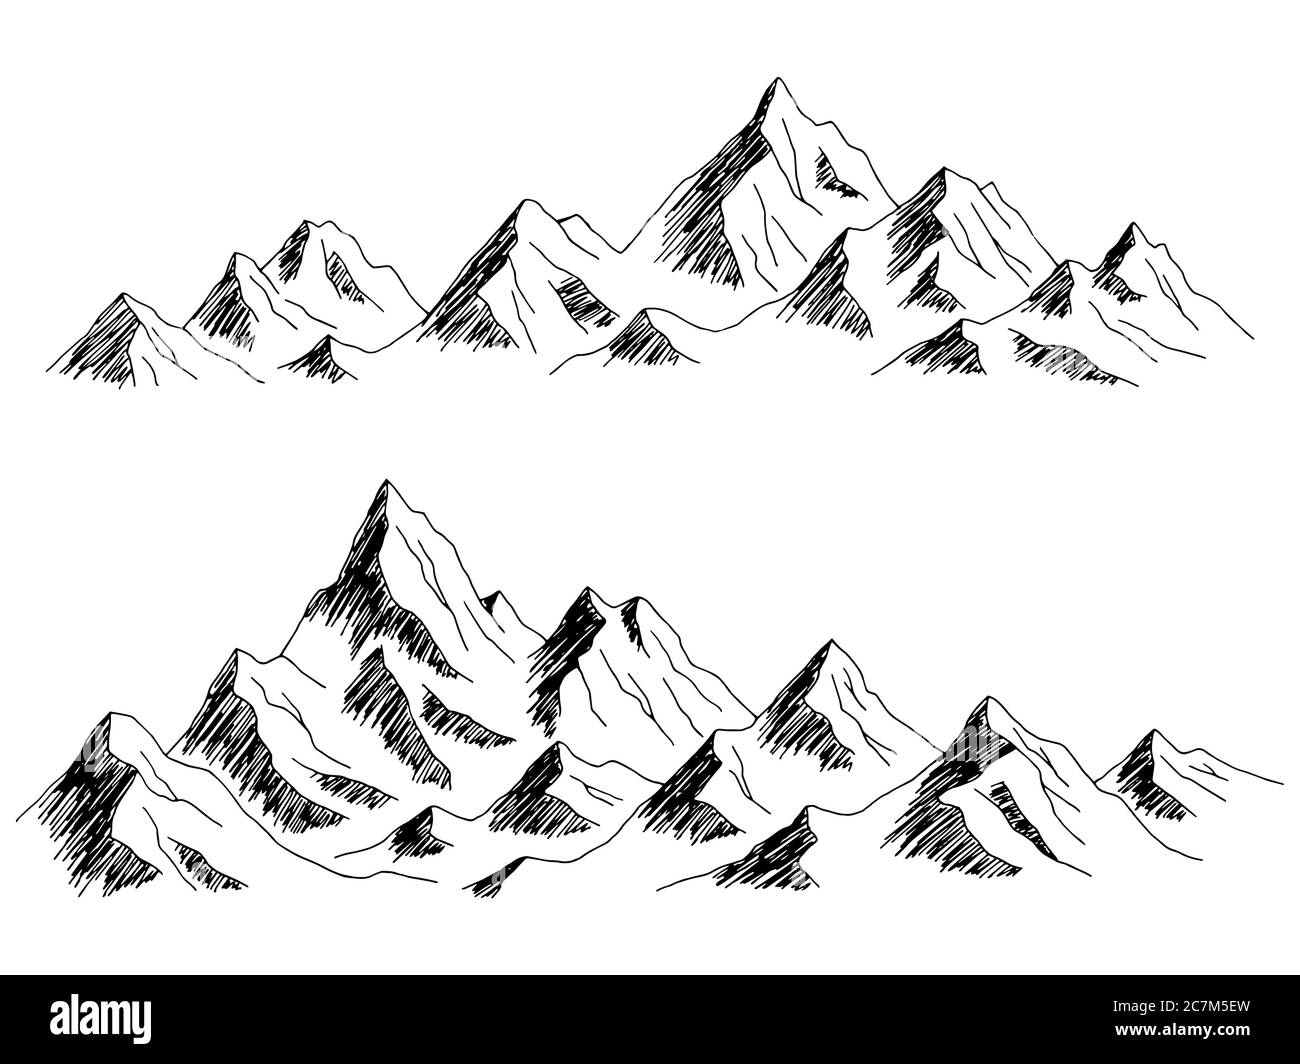 Bergkette Grafik schwarz weiß Landschaft Skizze Illustration Vektor Stock Vektor